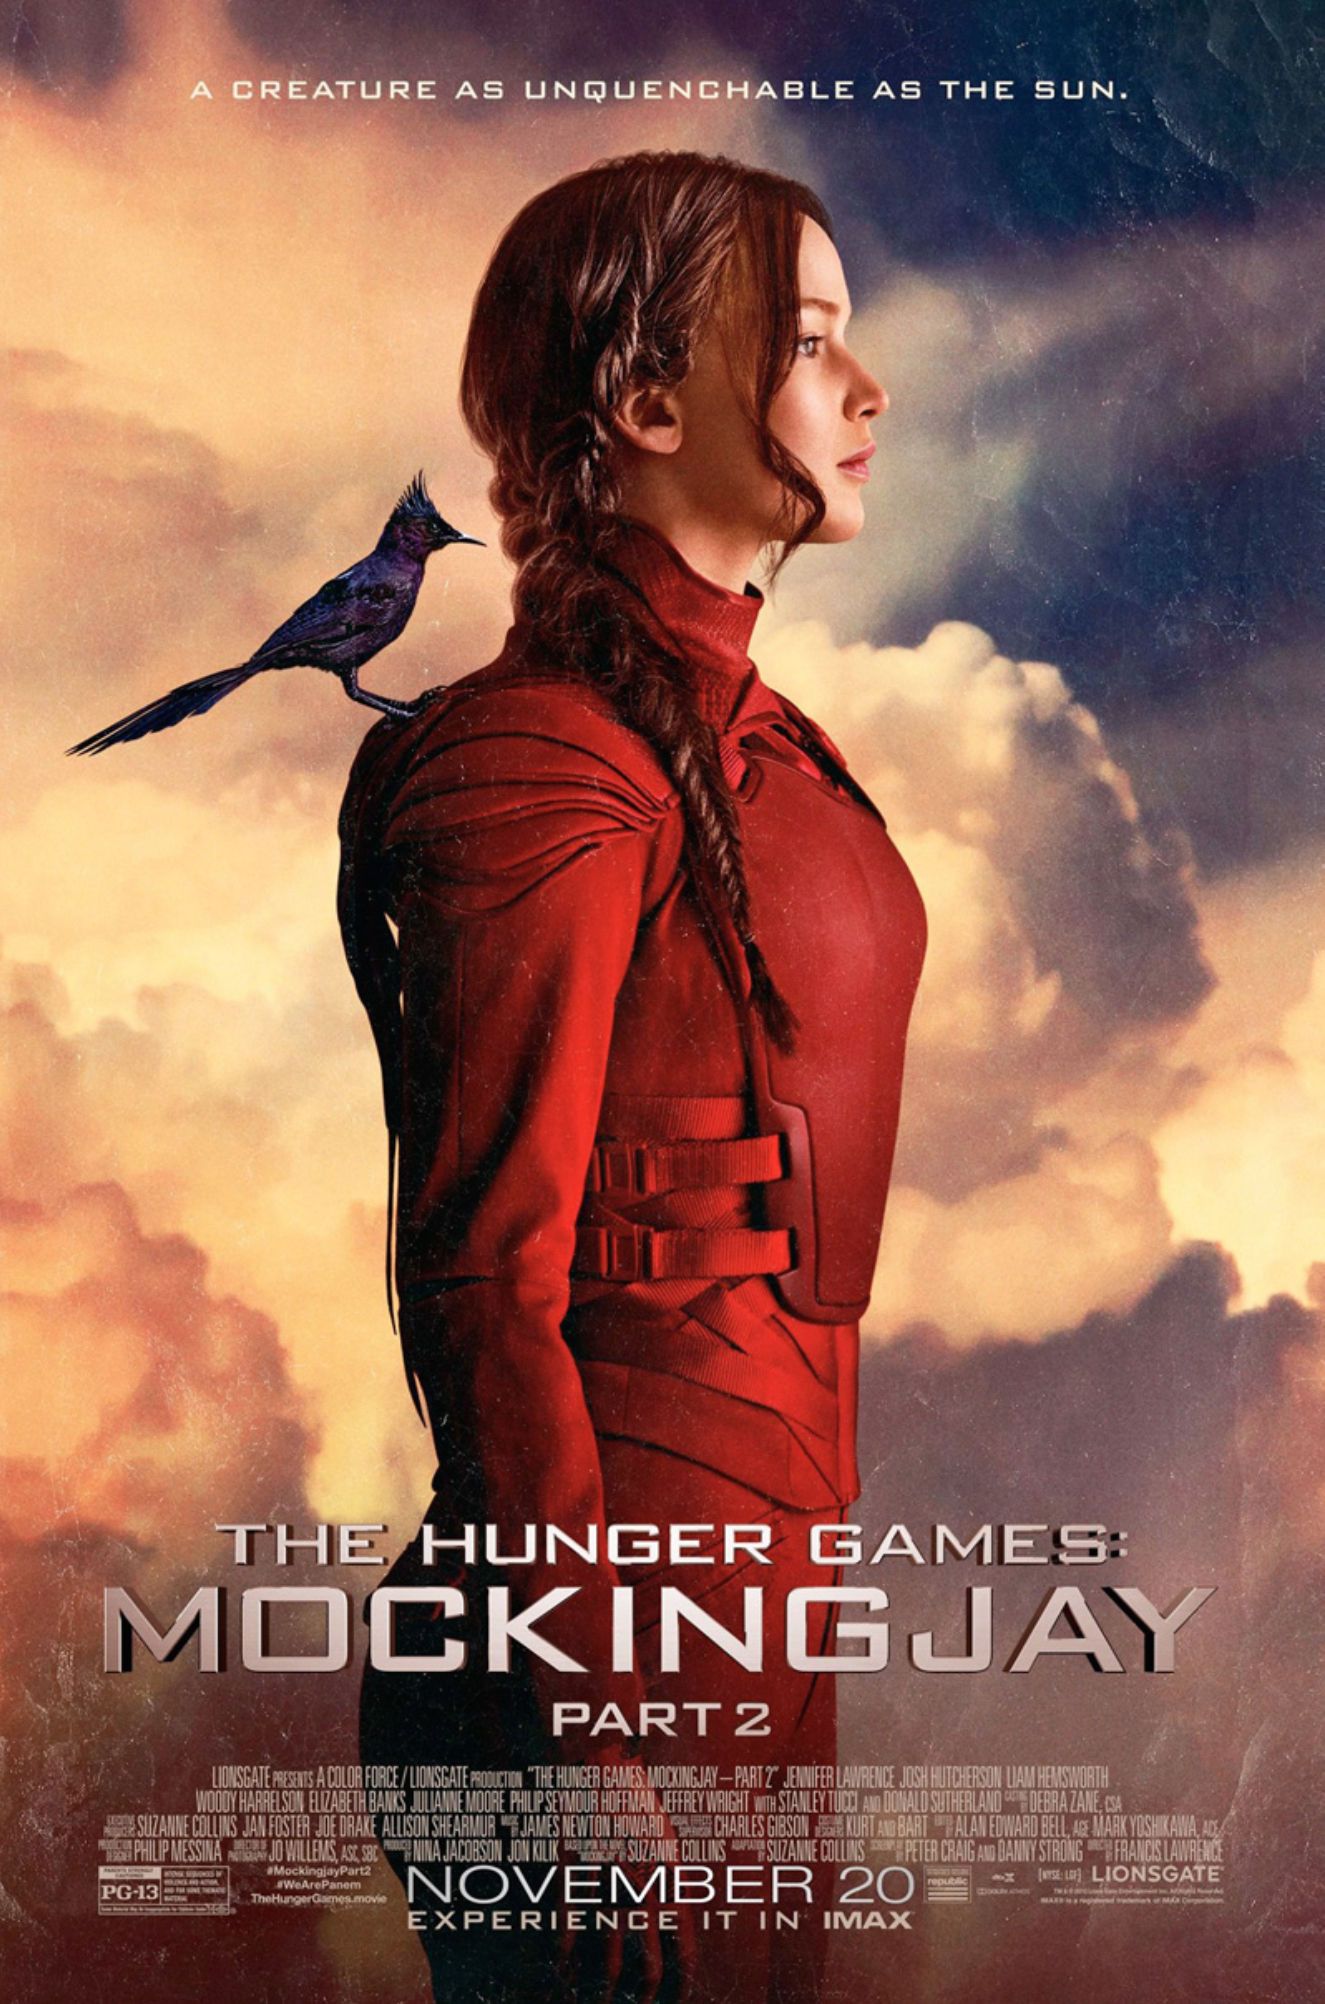 The Hunger Games: Mockingjay – Part 2 Trailer #3 & Poster: For Prim